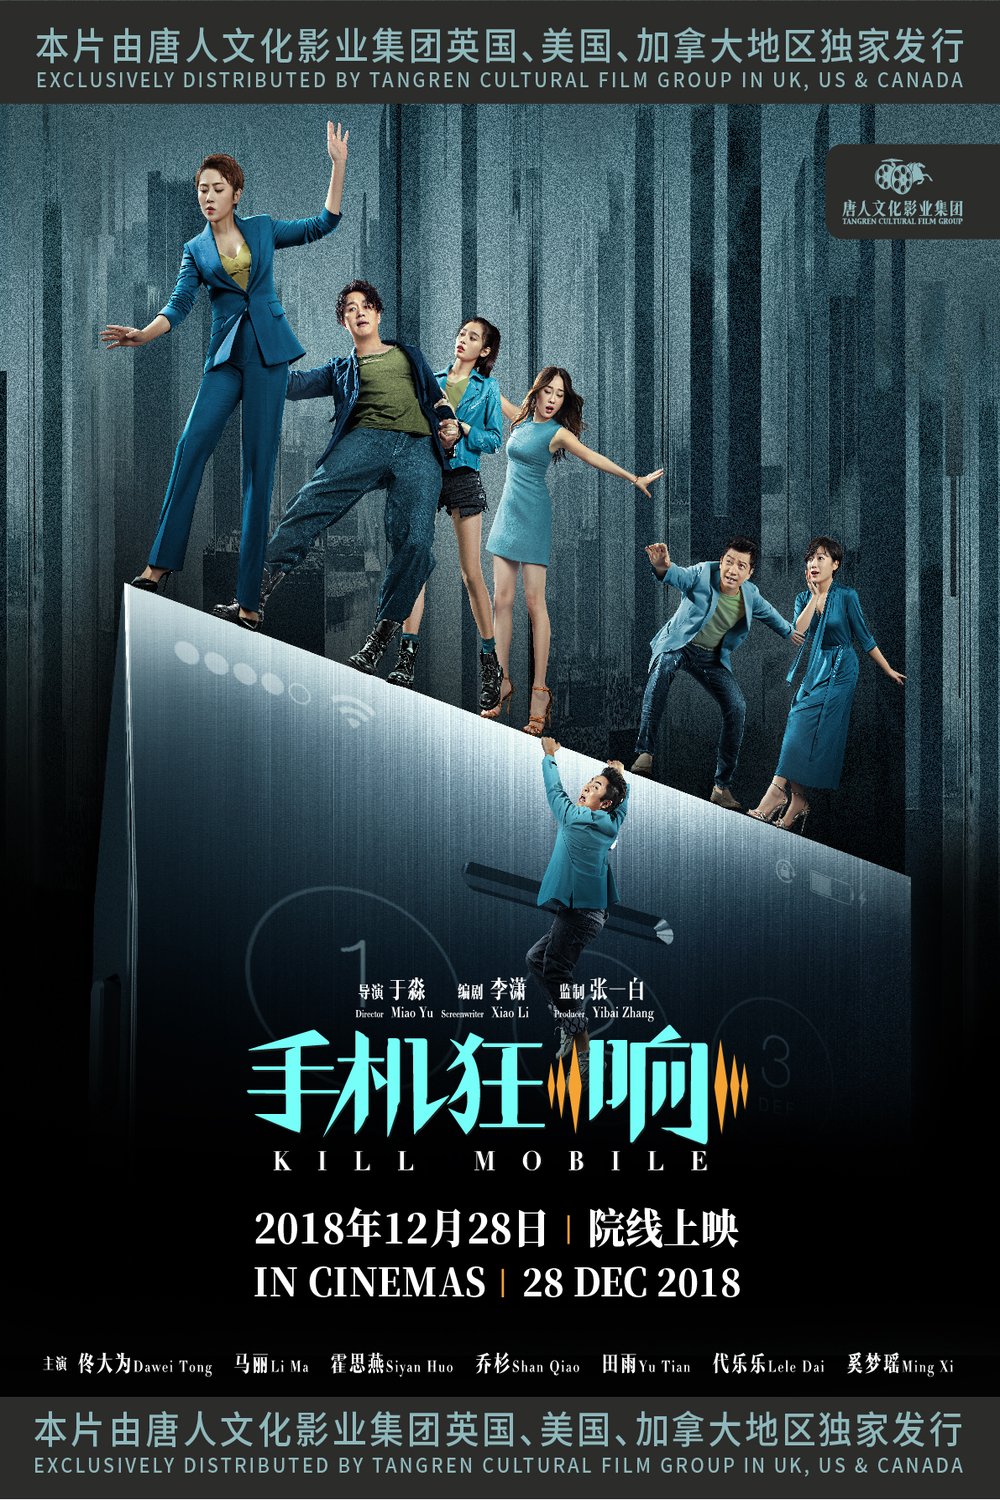 Mandarin poster of the movie Kill Mobile